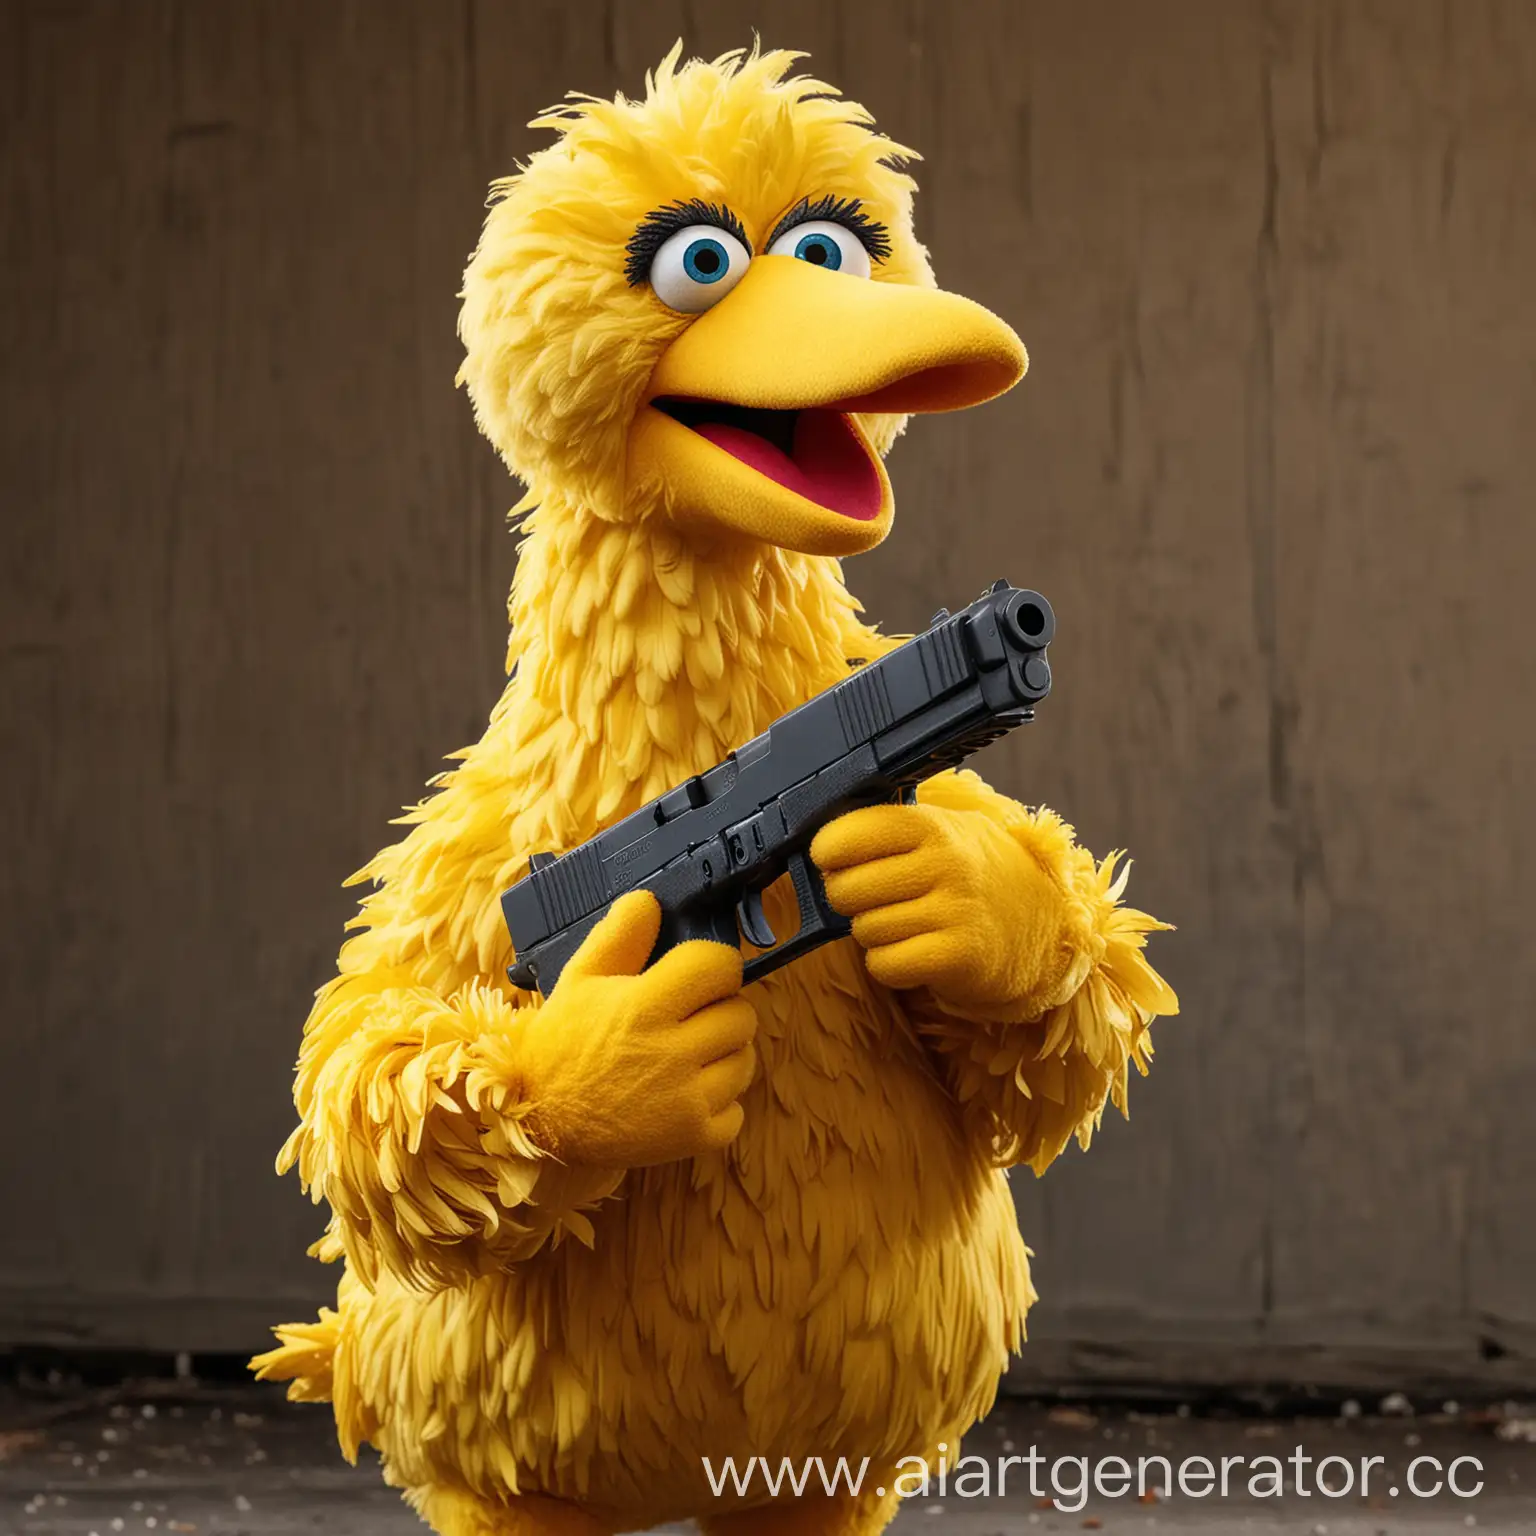 Big-Bird-with-Glock-17-Playful-Sesame-Street-Character-Poses-with-Handgun